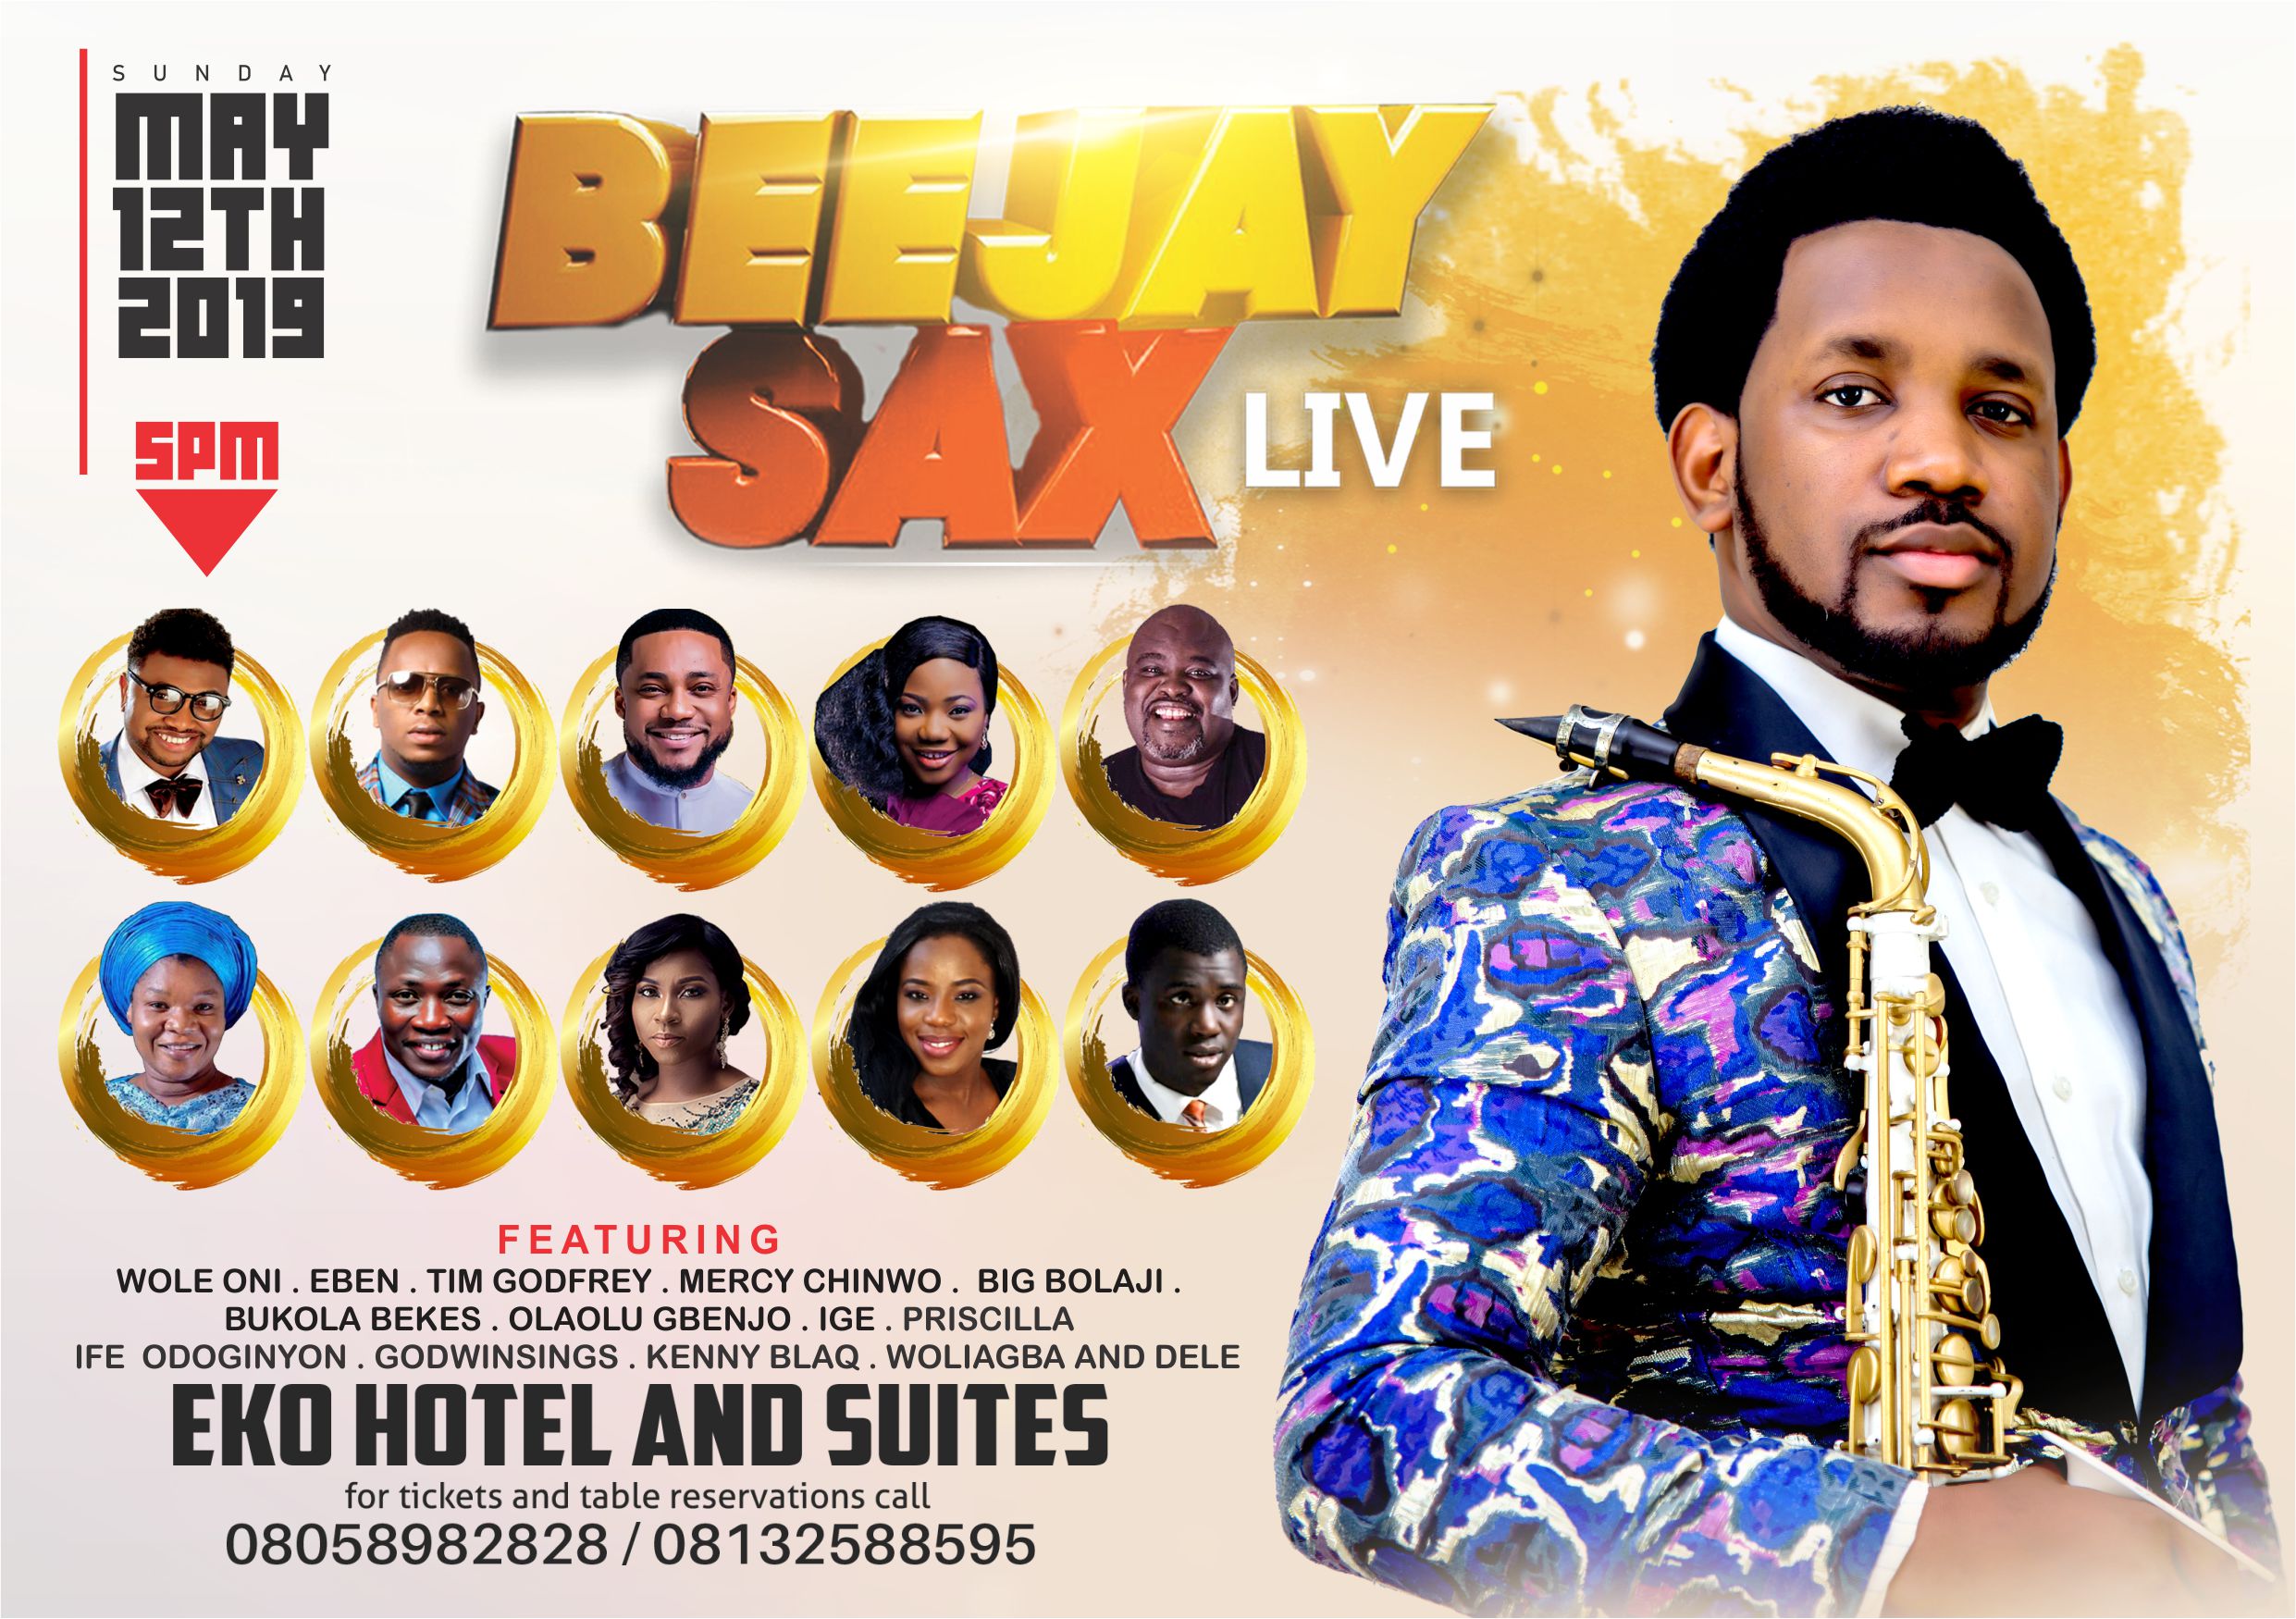 EVENT: Beejay Sax Returns With BeejaySaxLive2019